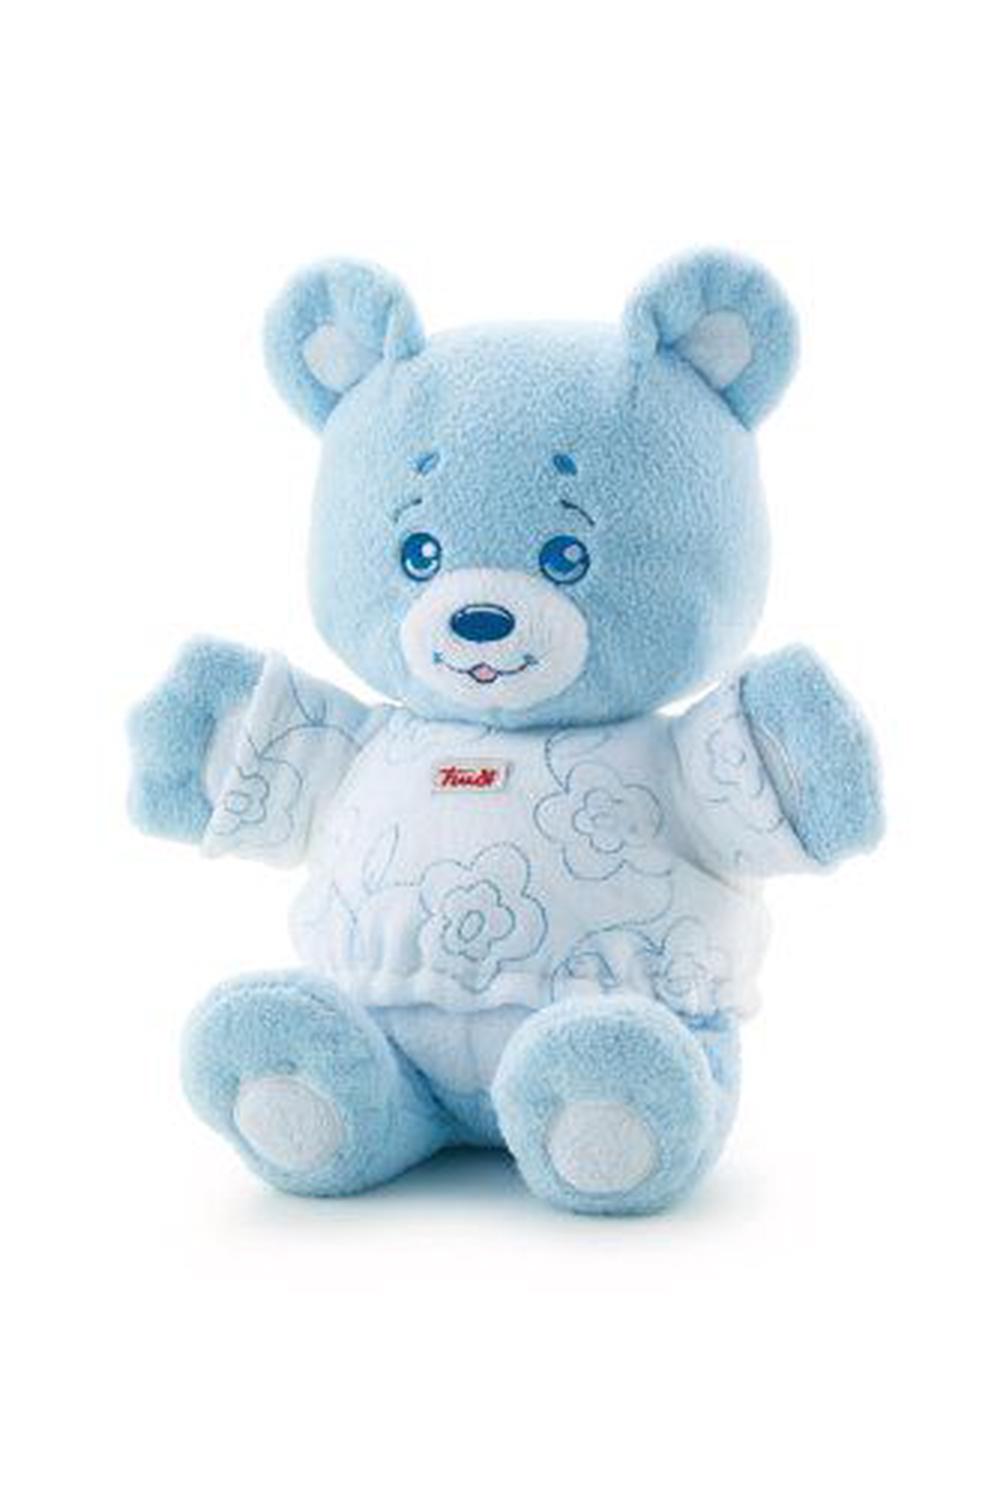 Trudi Bear Plush Toy.